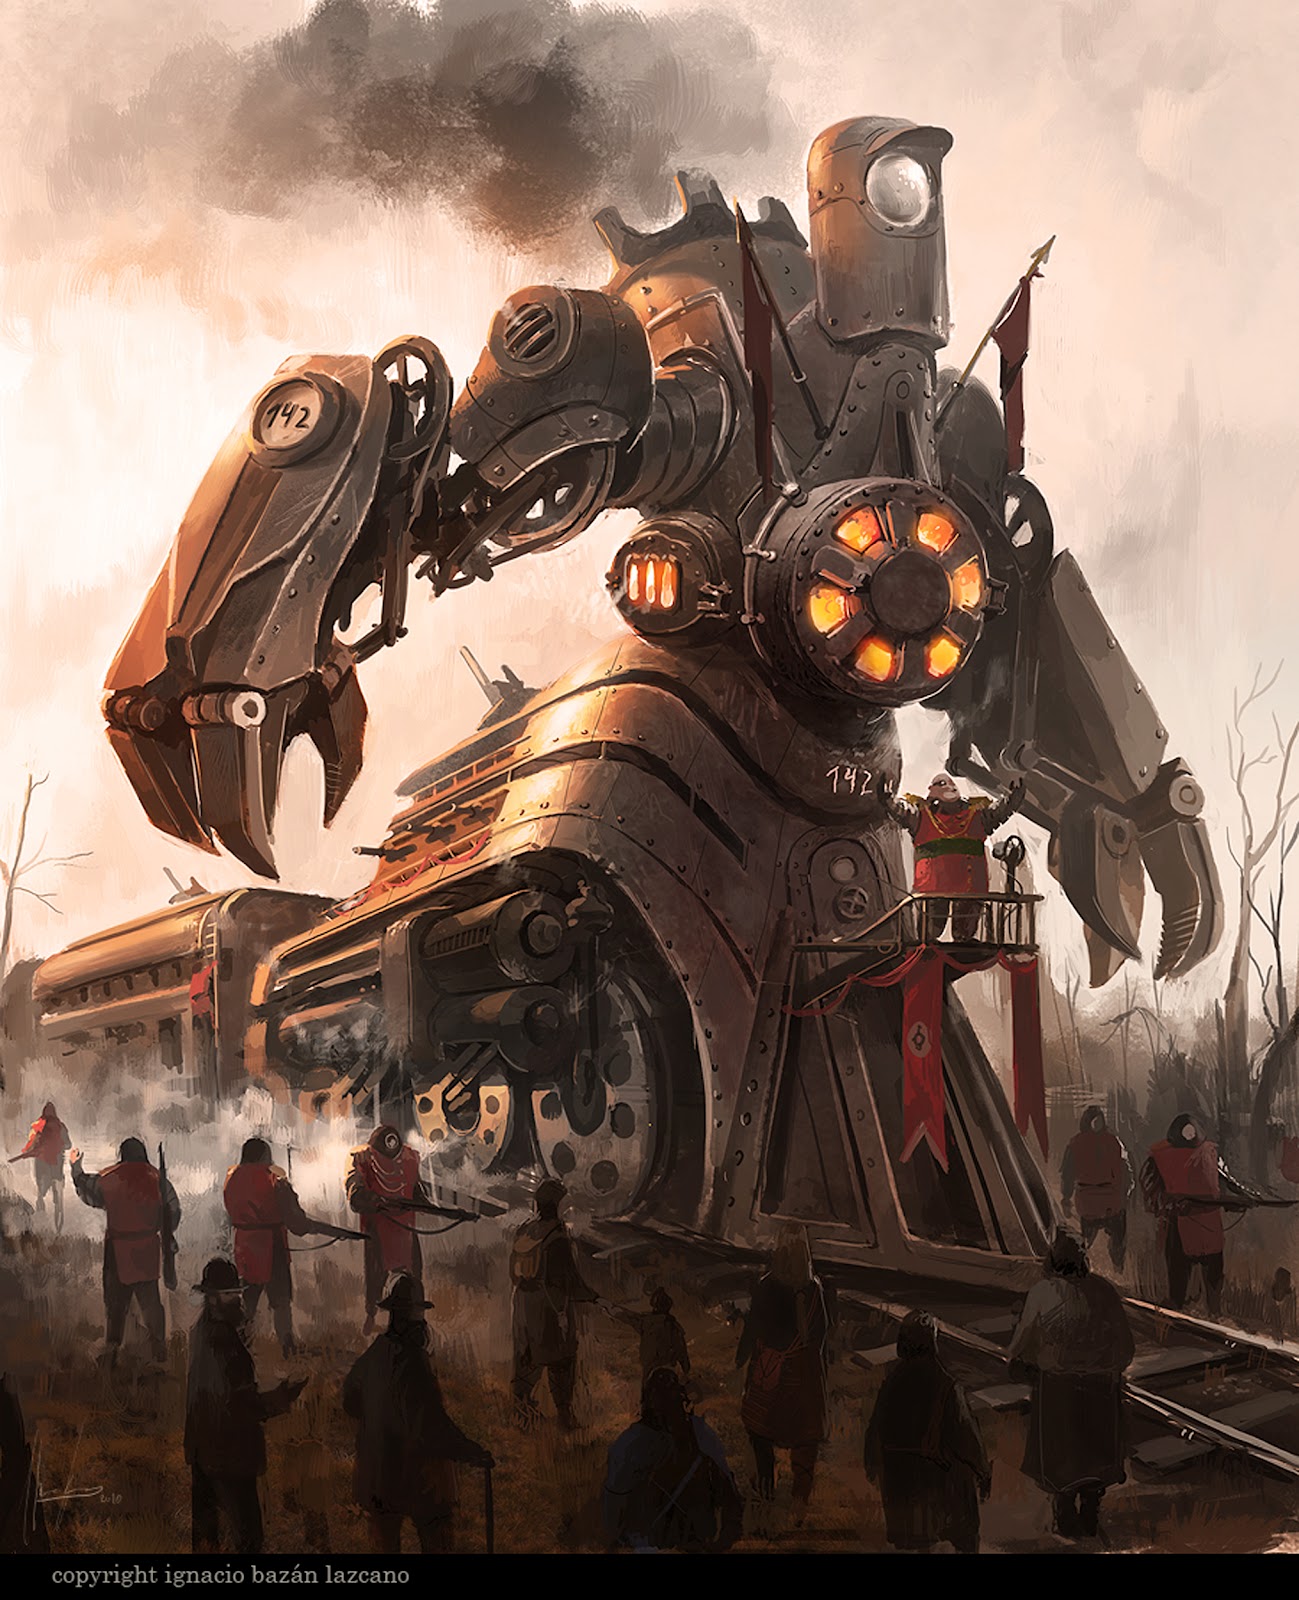 92+Ignacio+Bazan+Lazcano+steampunk+train+tank+giant+robot+mecha+concept+design.jpg